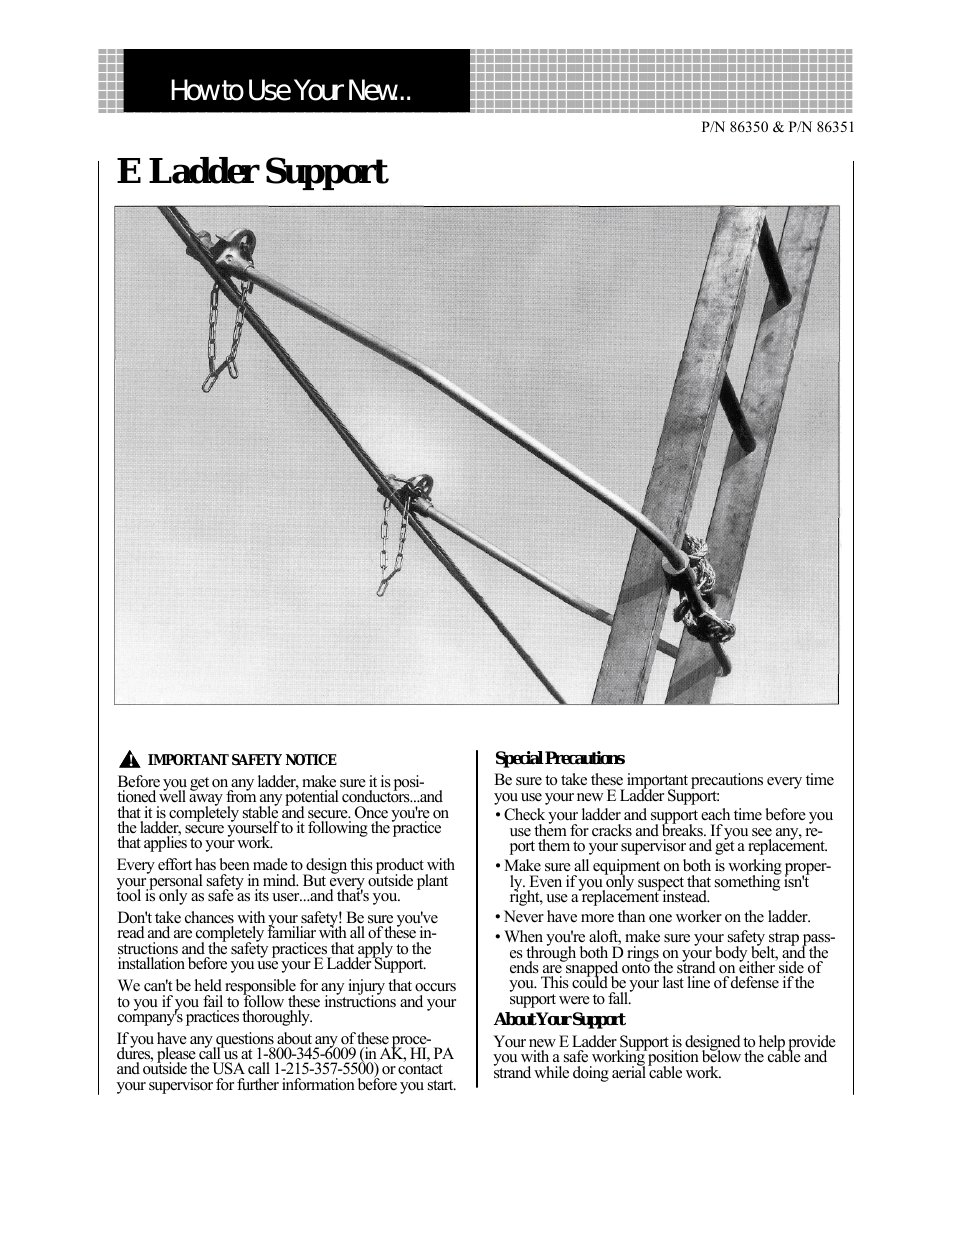 86350 E ladder Support